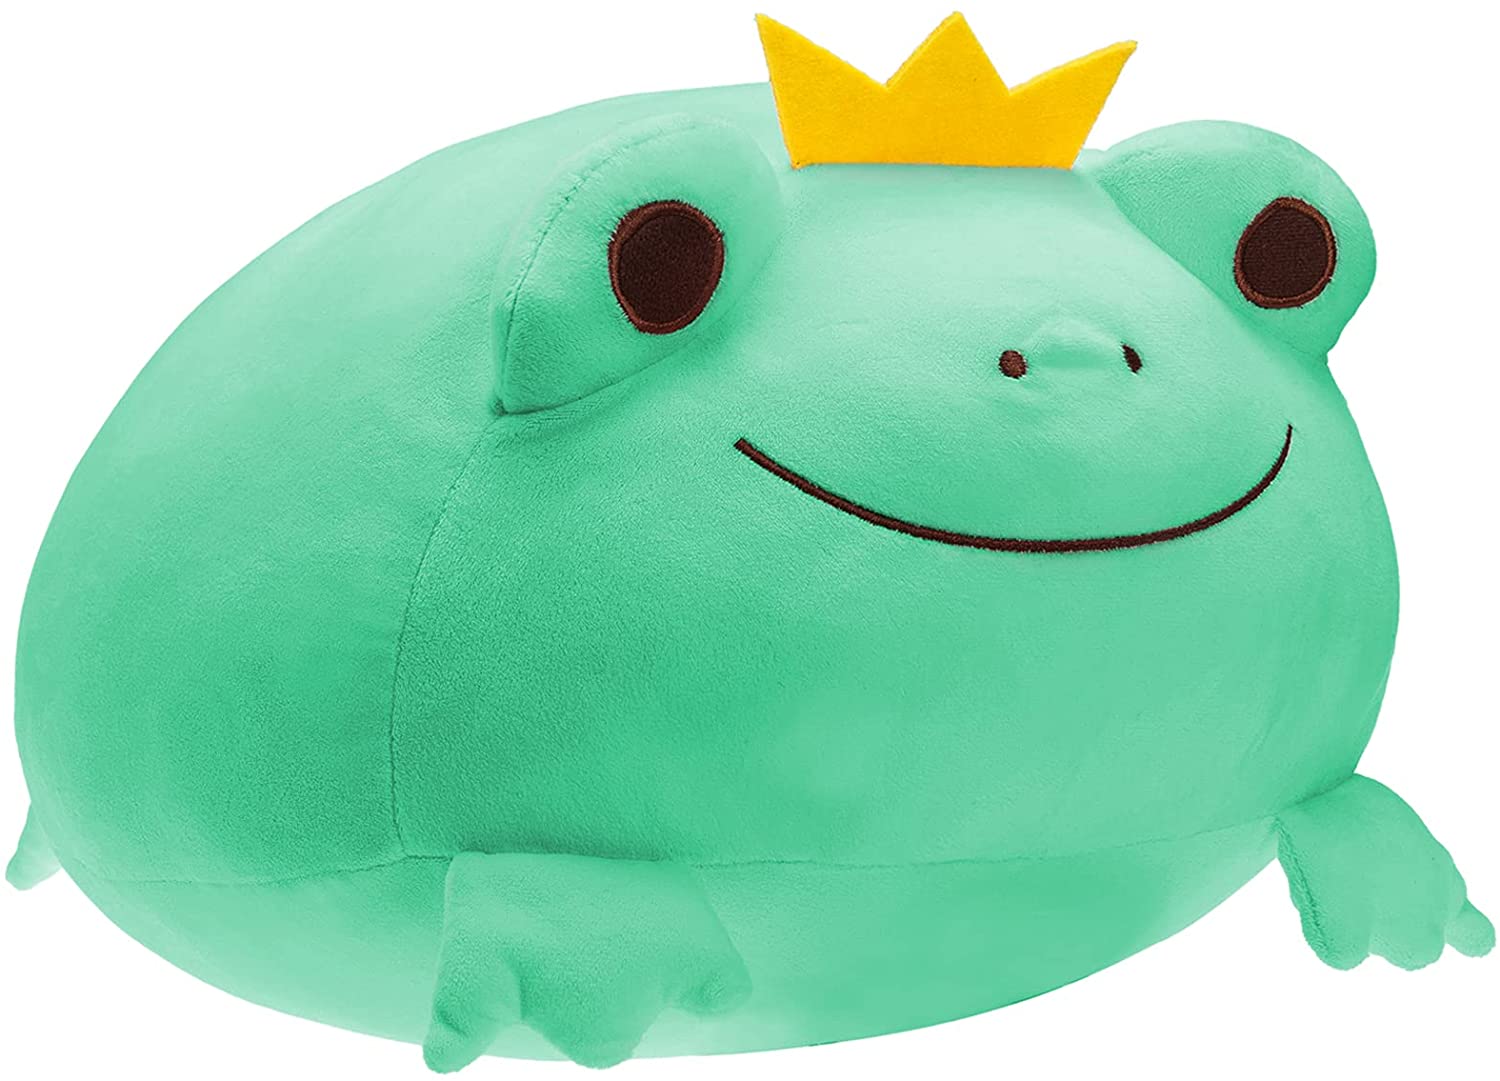 DITUCU 16.5 inch Stuffed Animal Frog Plush Toy Squishy Frog Plush